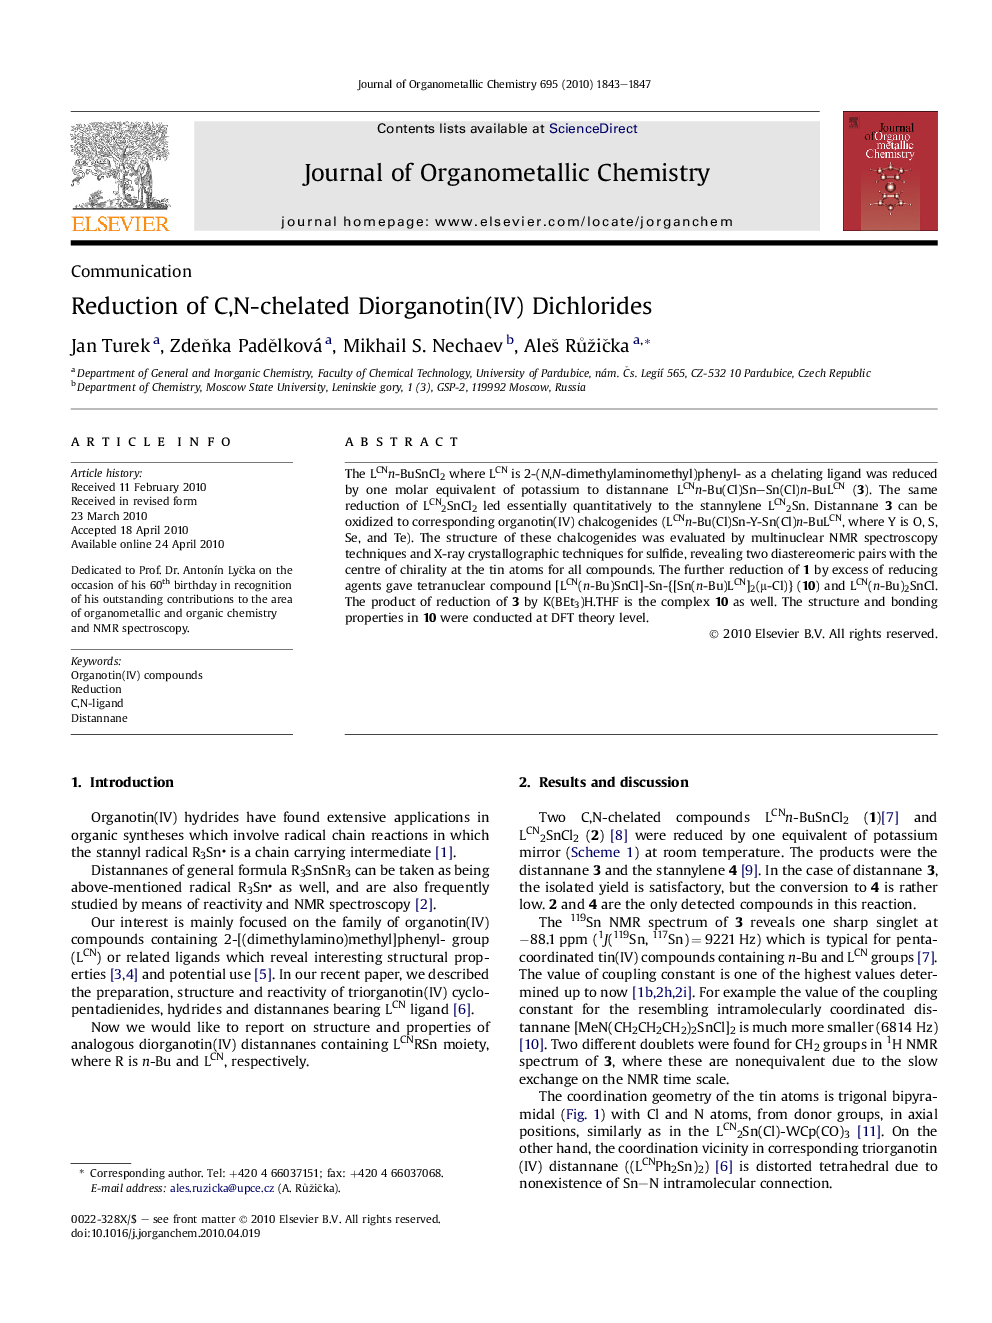 Reduction of C,N-chelated Diorganotin(IV) Dichlorides